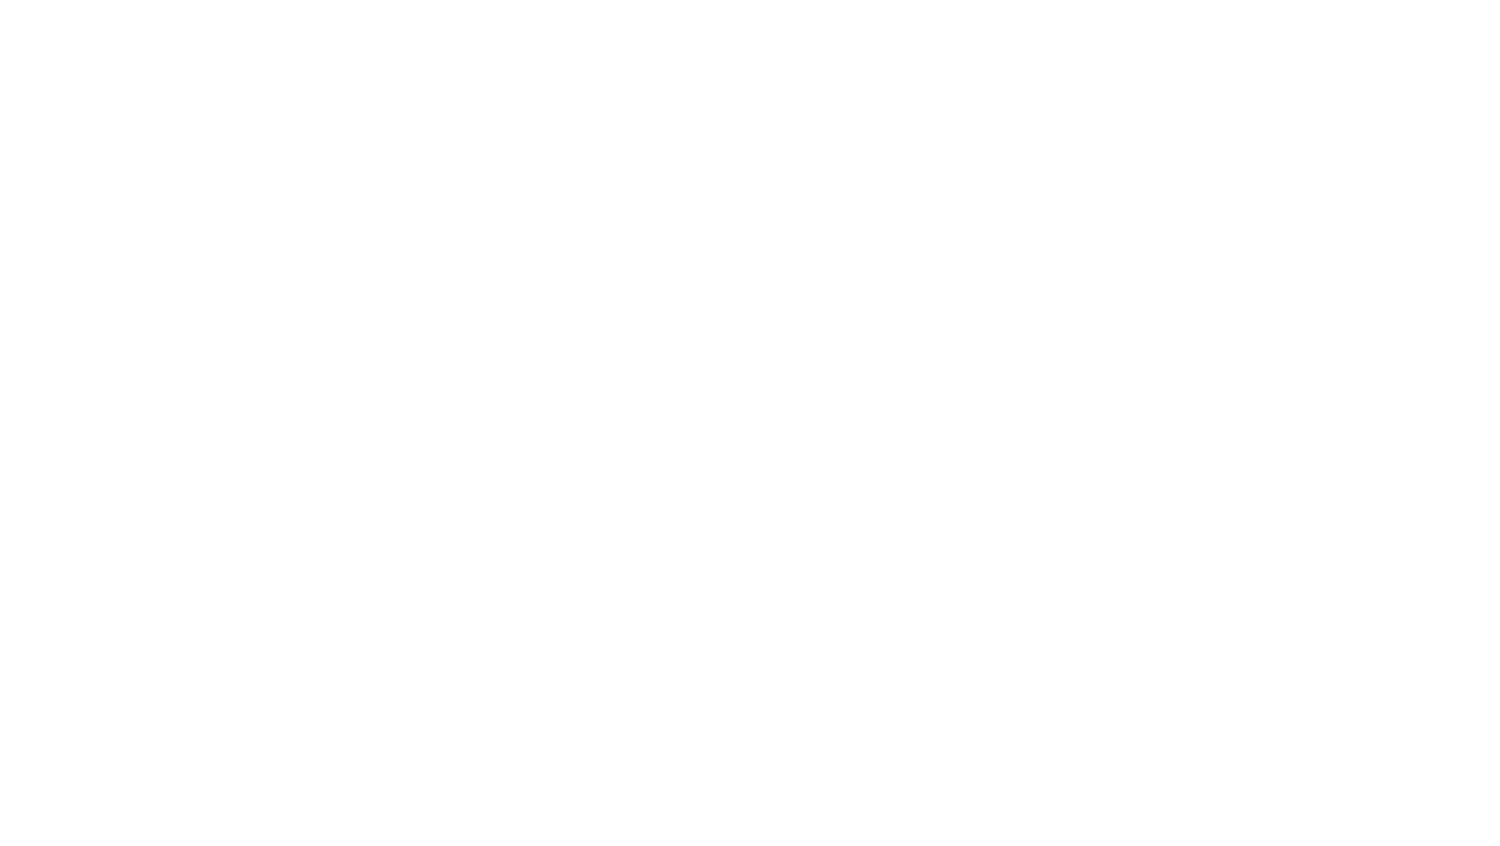 Nomad Designs Logo